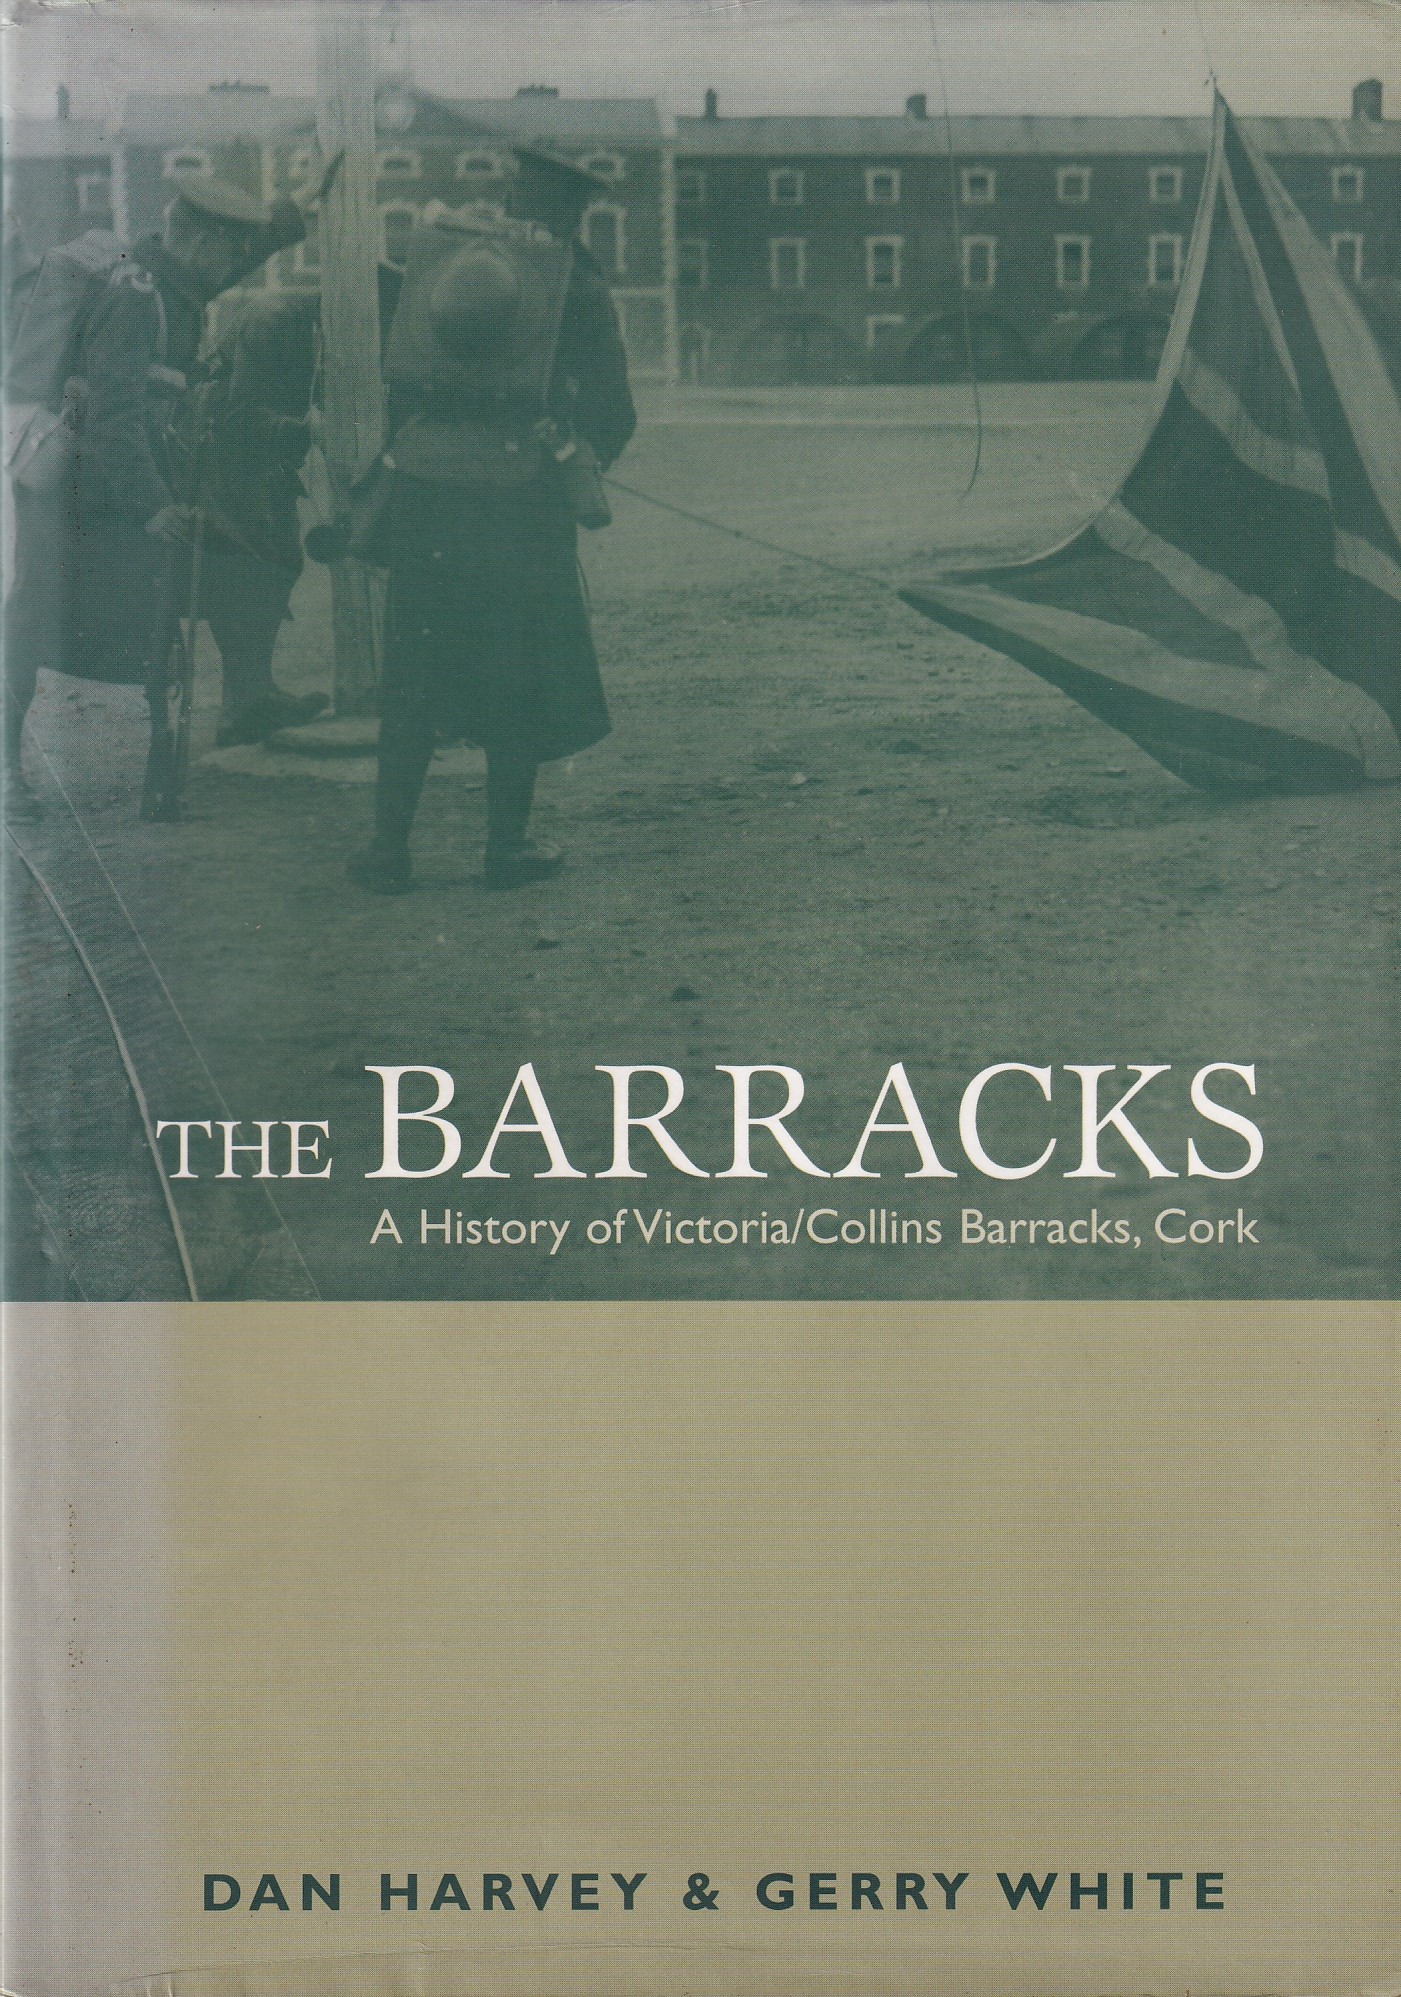 The Barracks: The History of Victoria/Collins Barracks, Cork by Dan Harvey & Gerry White